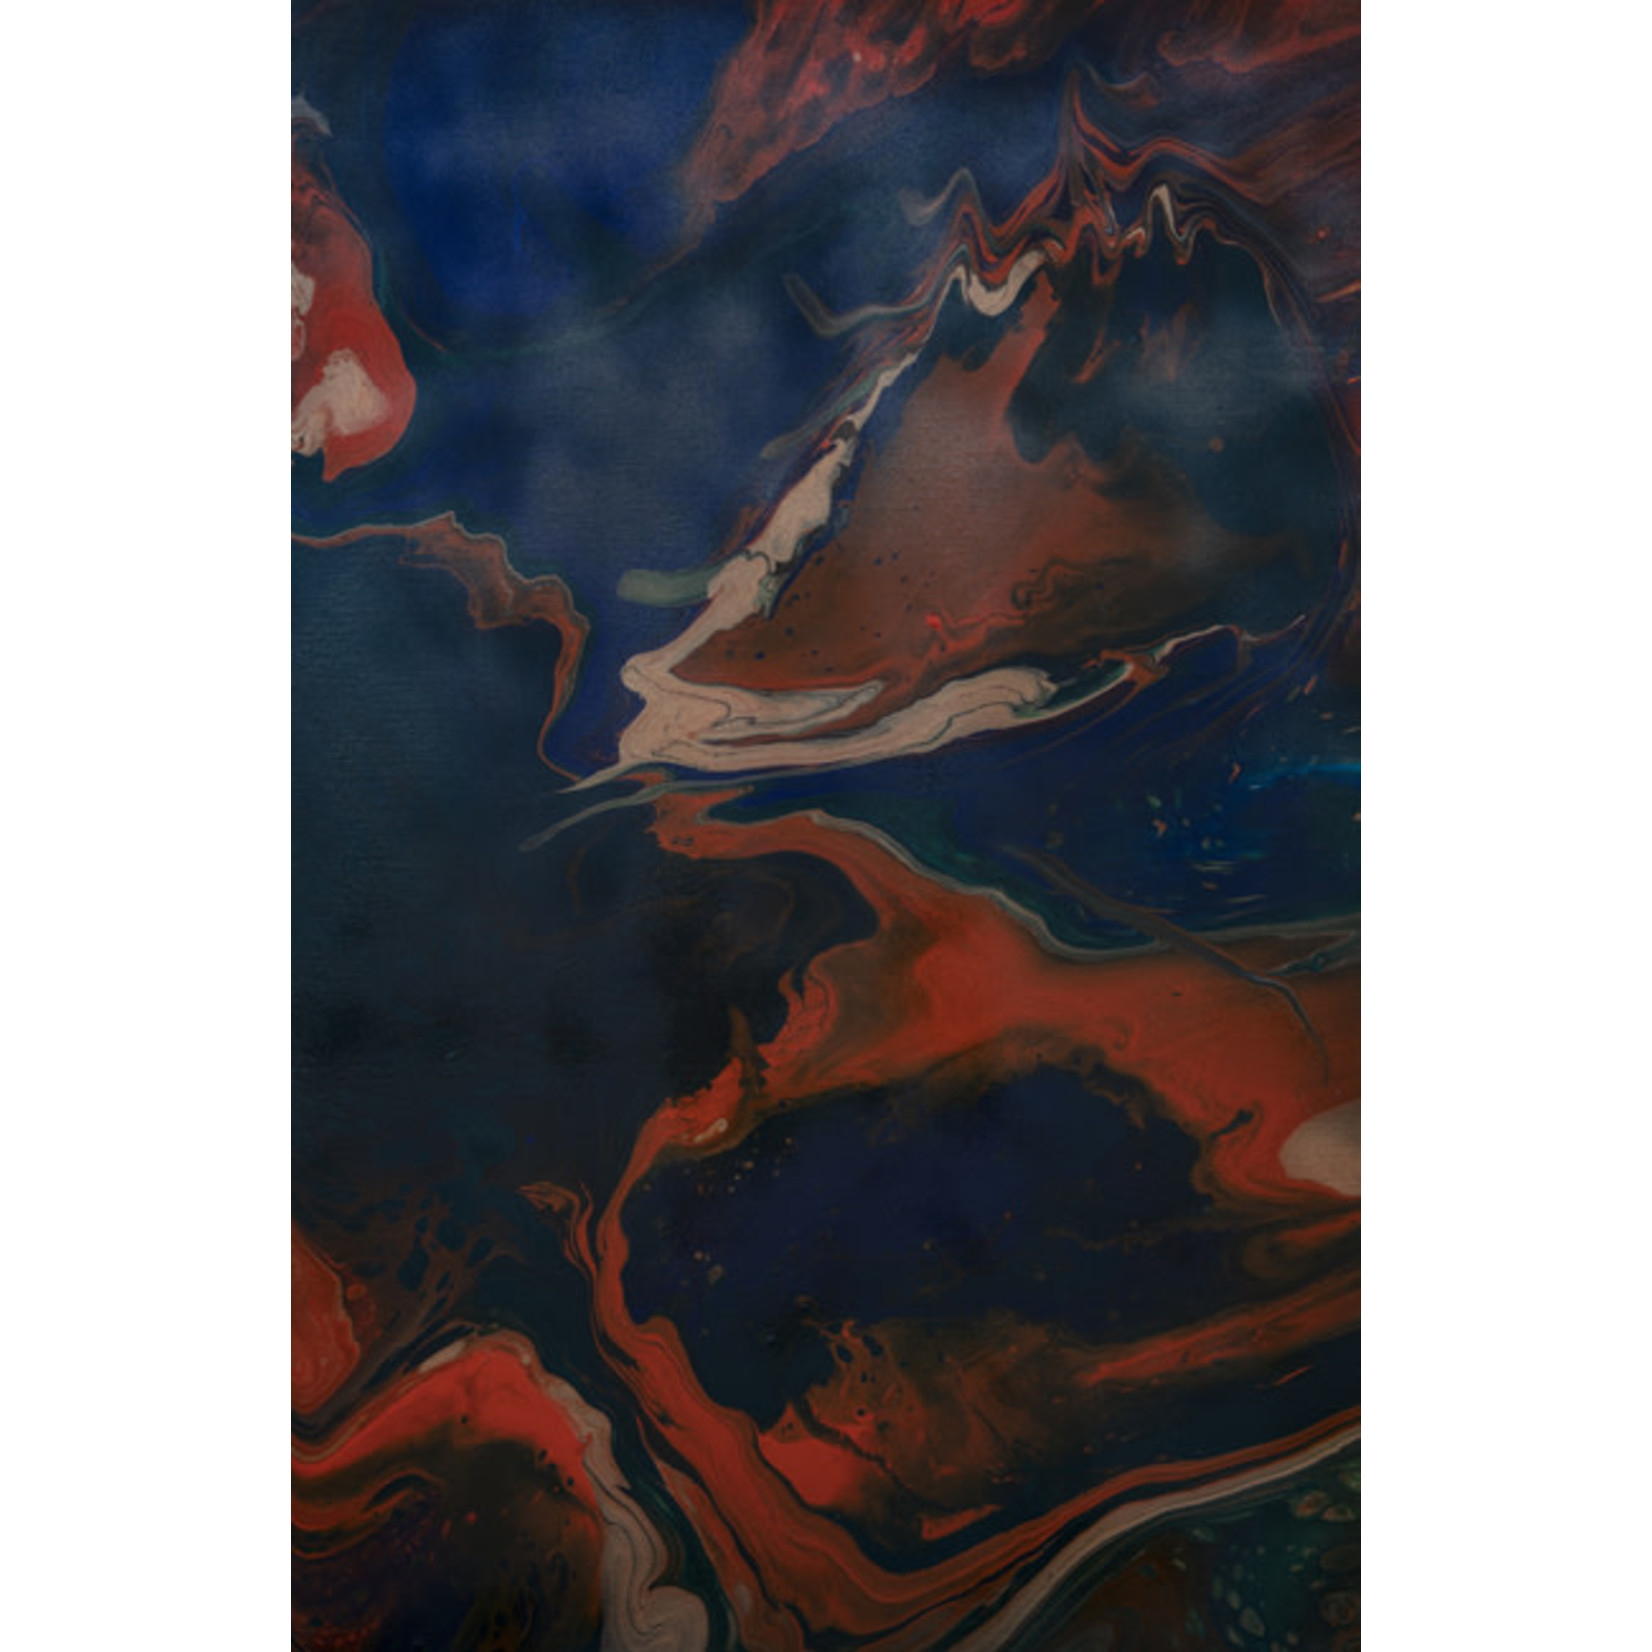 Nancy Karnes "BEAST OF THE LAND" Acrylic on Canvas 36x24